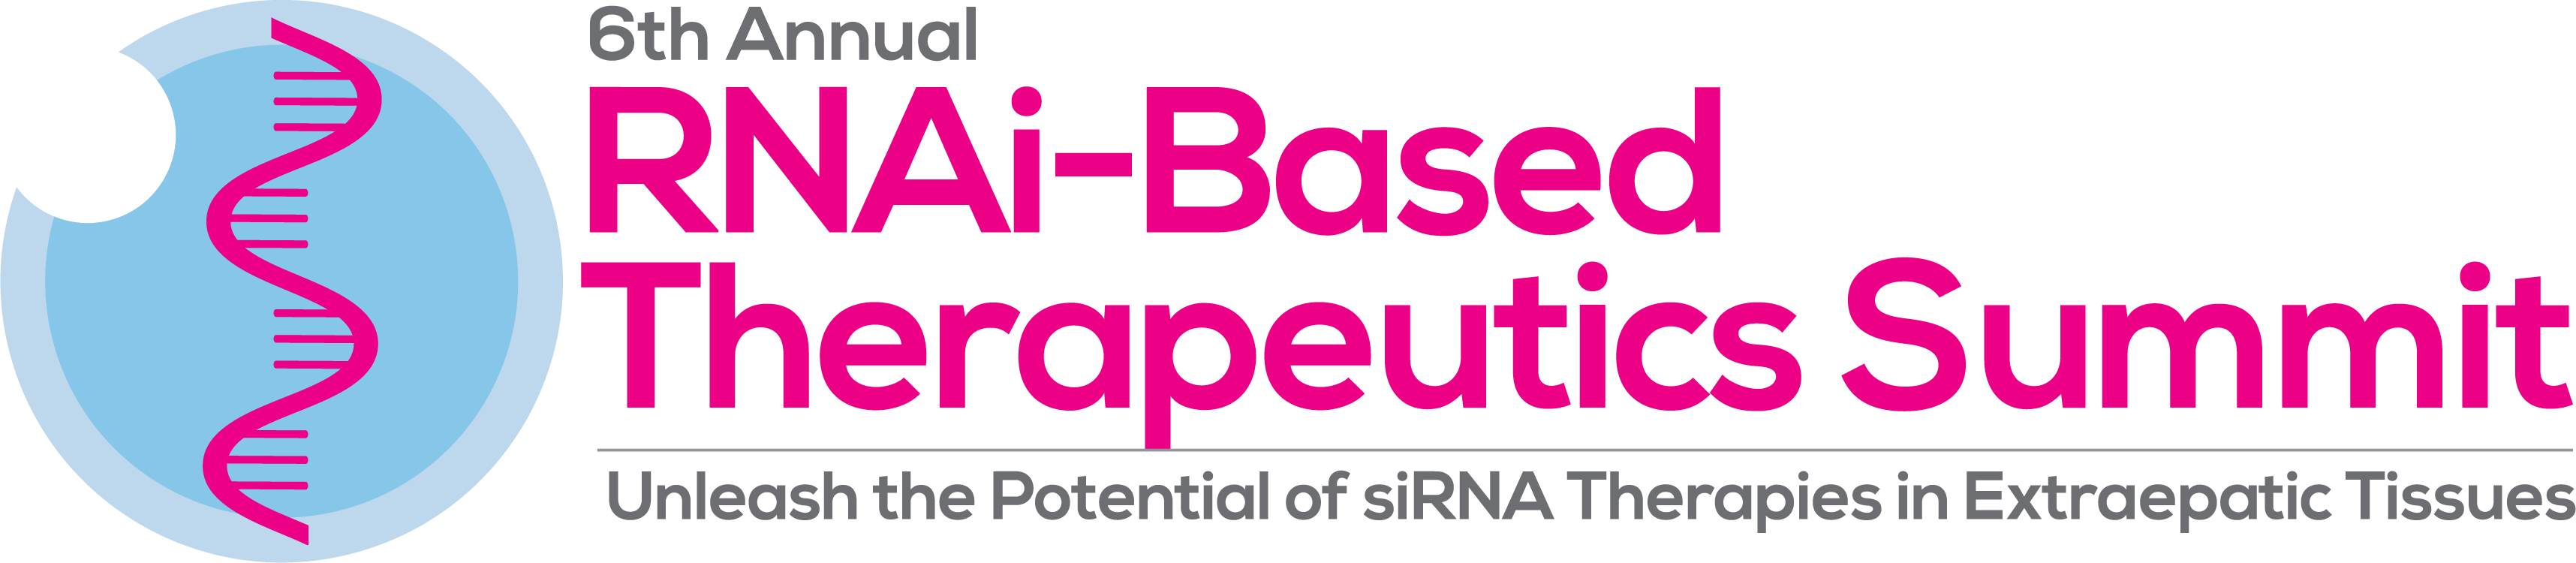 6th RNAi-Based Therapeutics Summit STRAPLINE